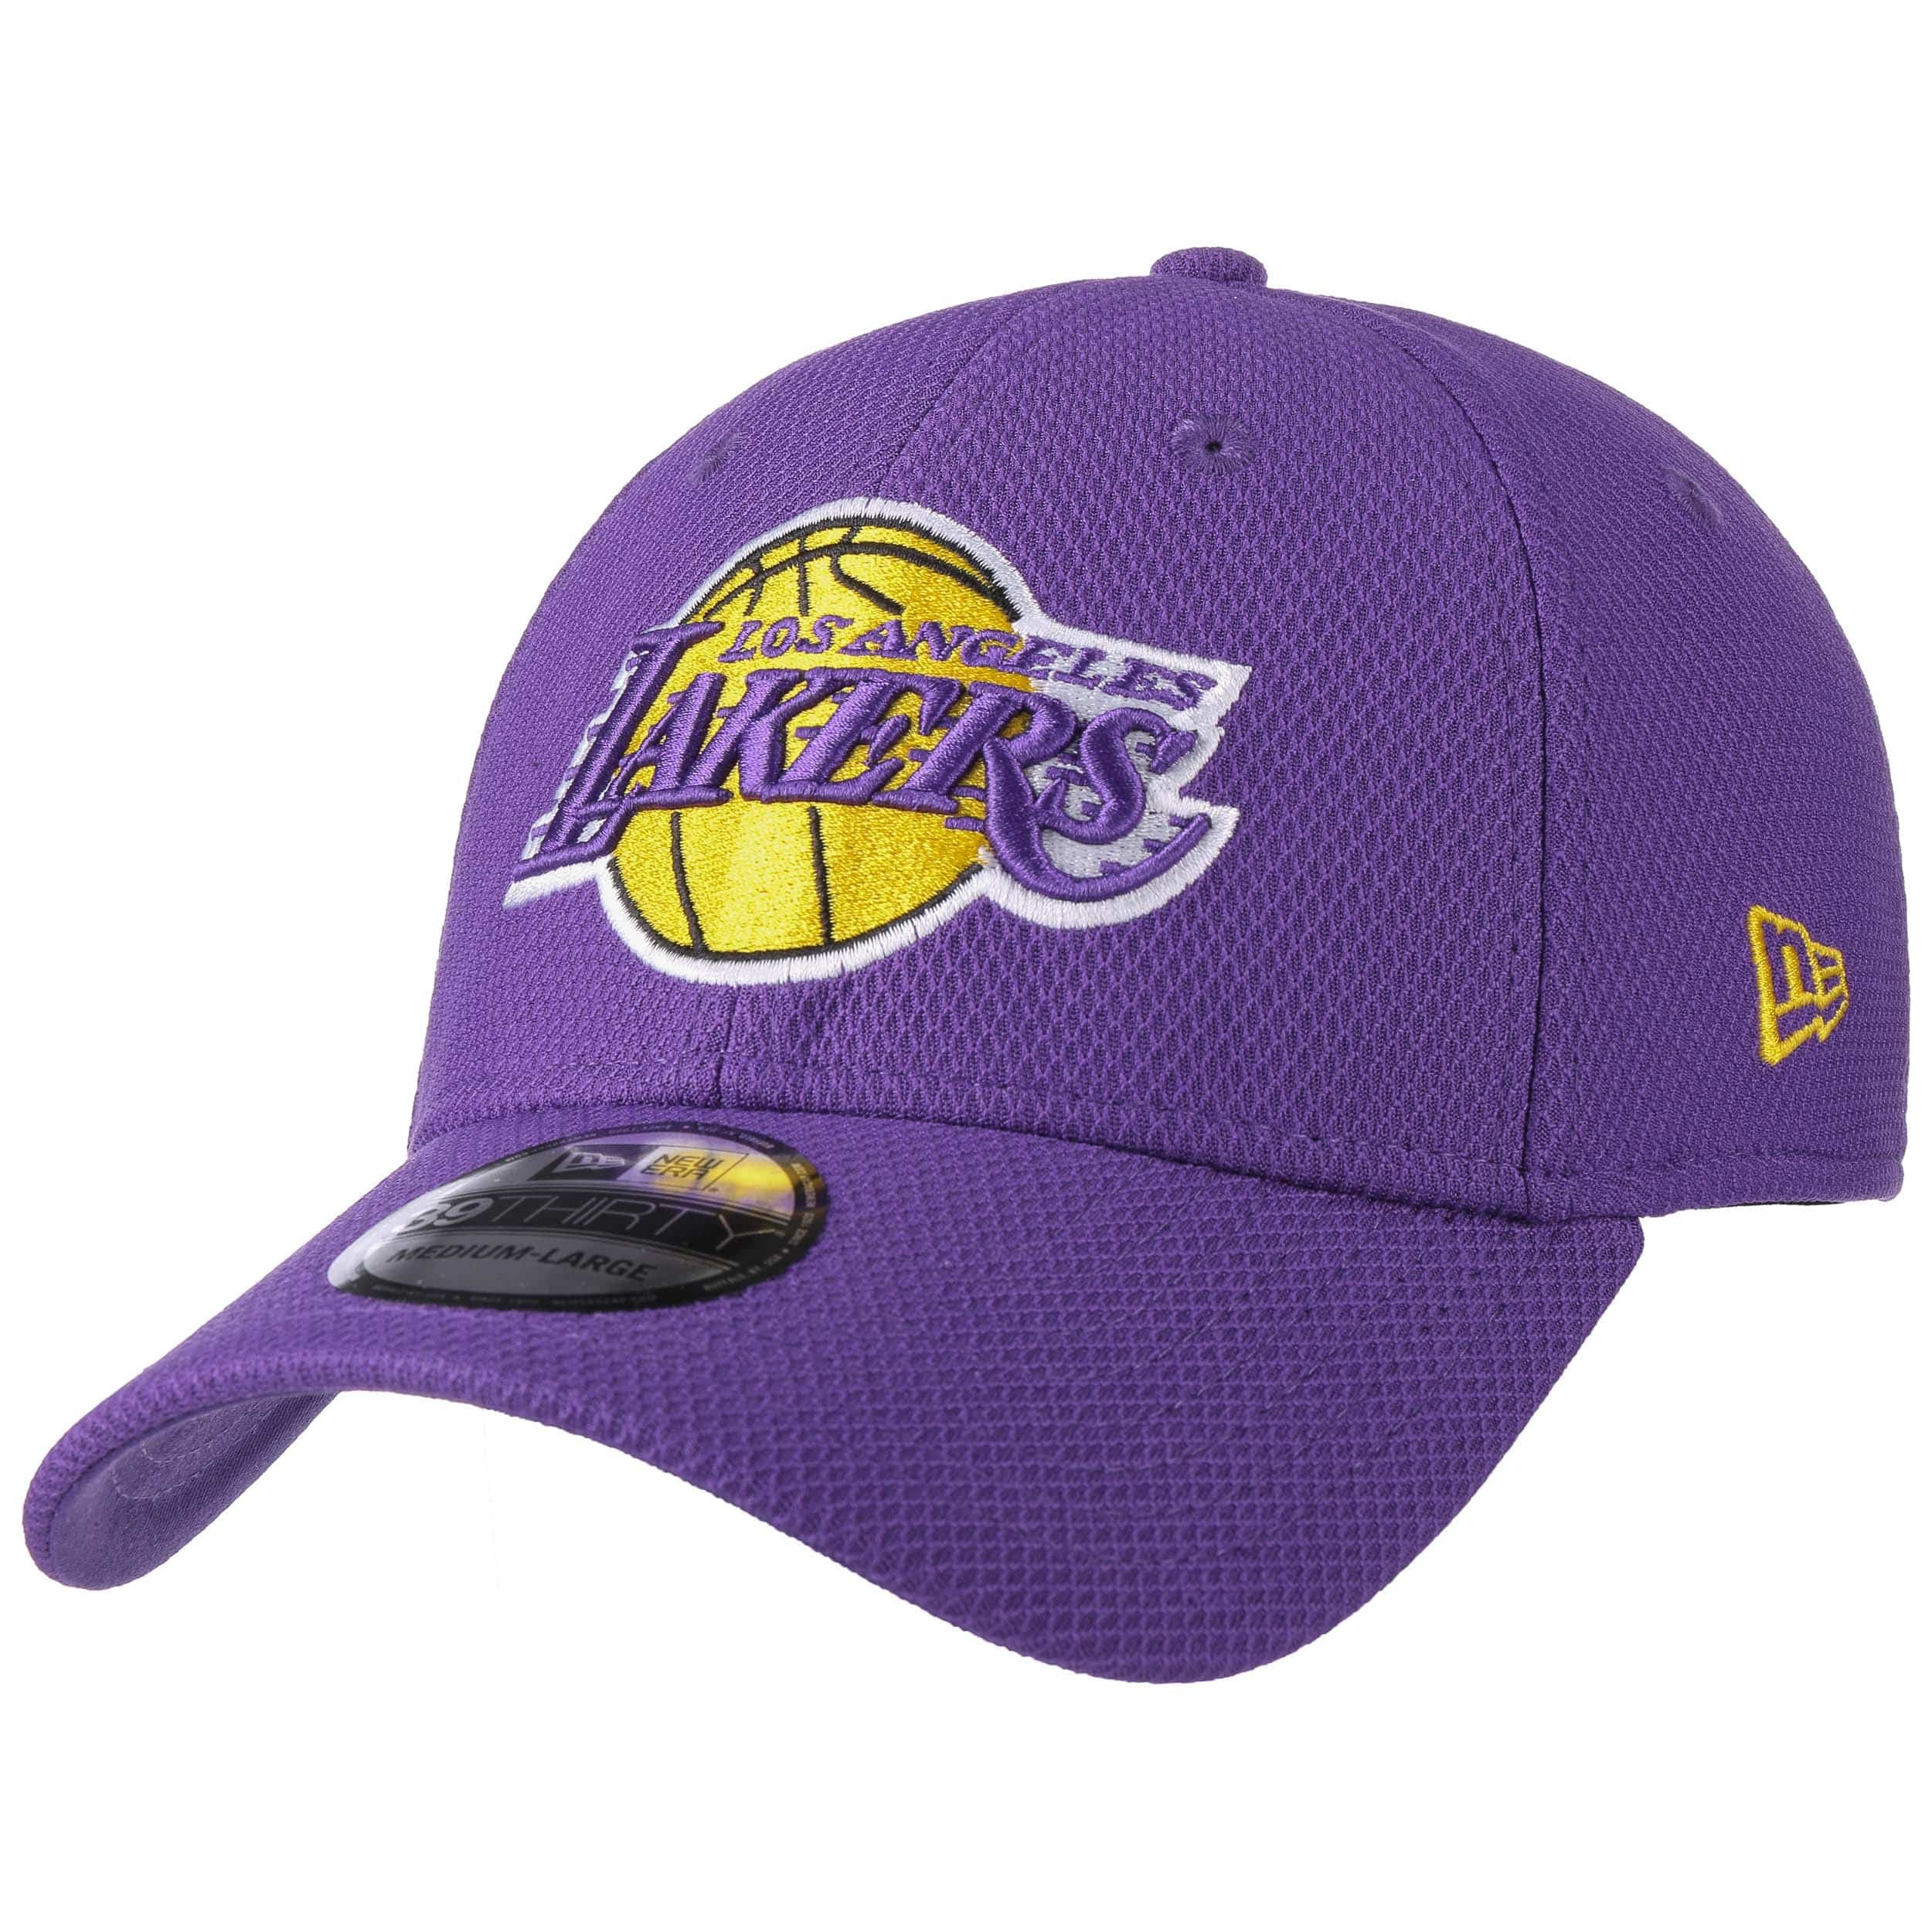 39Thirty Diamond Lakers Cap by New Era - 30,95